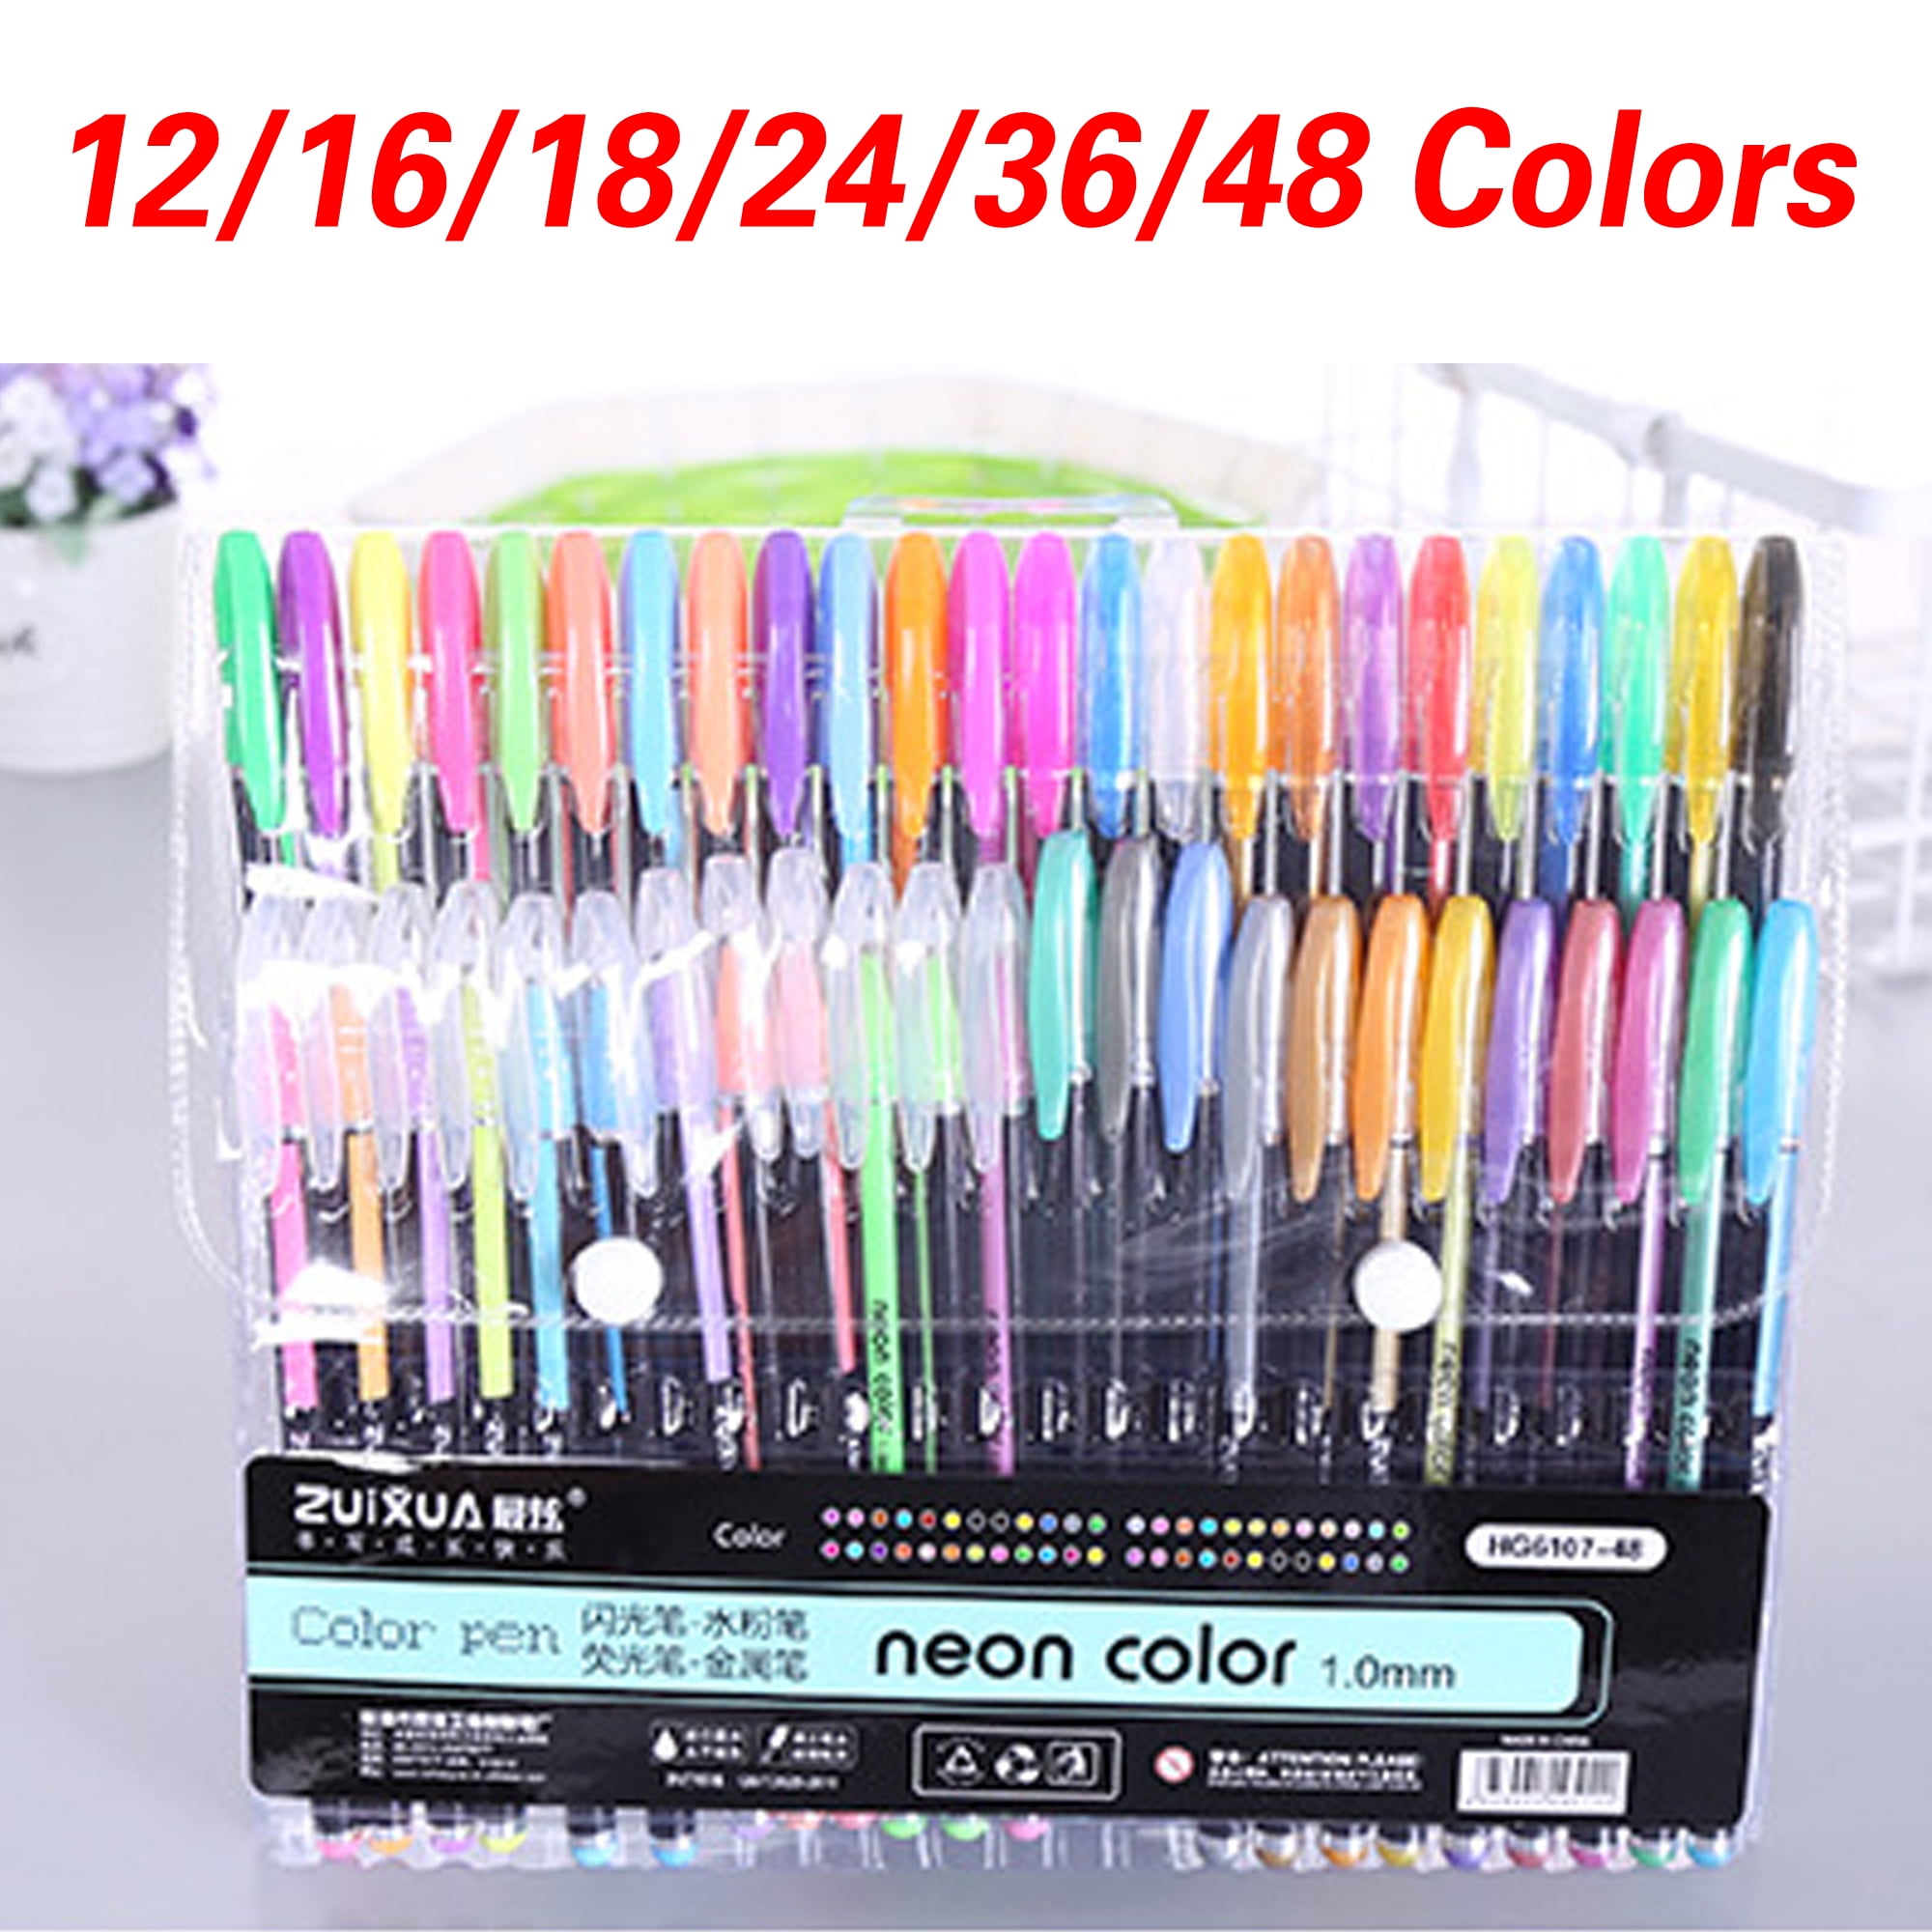 Colorya Gel Pens - 48 Metallic & Glitter Gel Pens + Carry Bag, Perfect Gel  Pens for Adult Coloring Books, Sketching, Drawing, Doodling, Bullet  Journals - 31 Glitter & 17 Metallic Colors : : Home